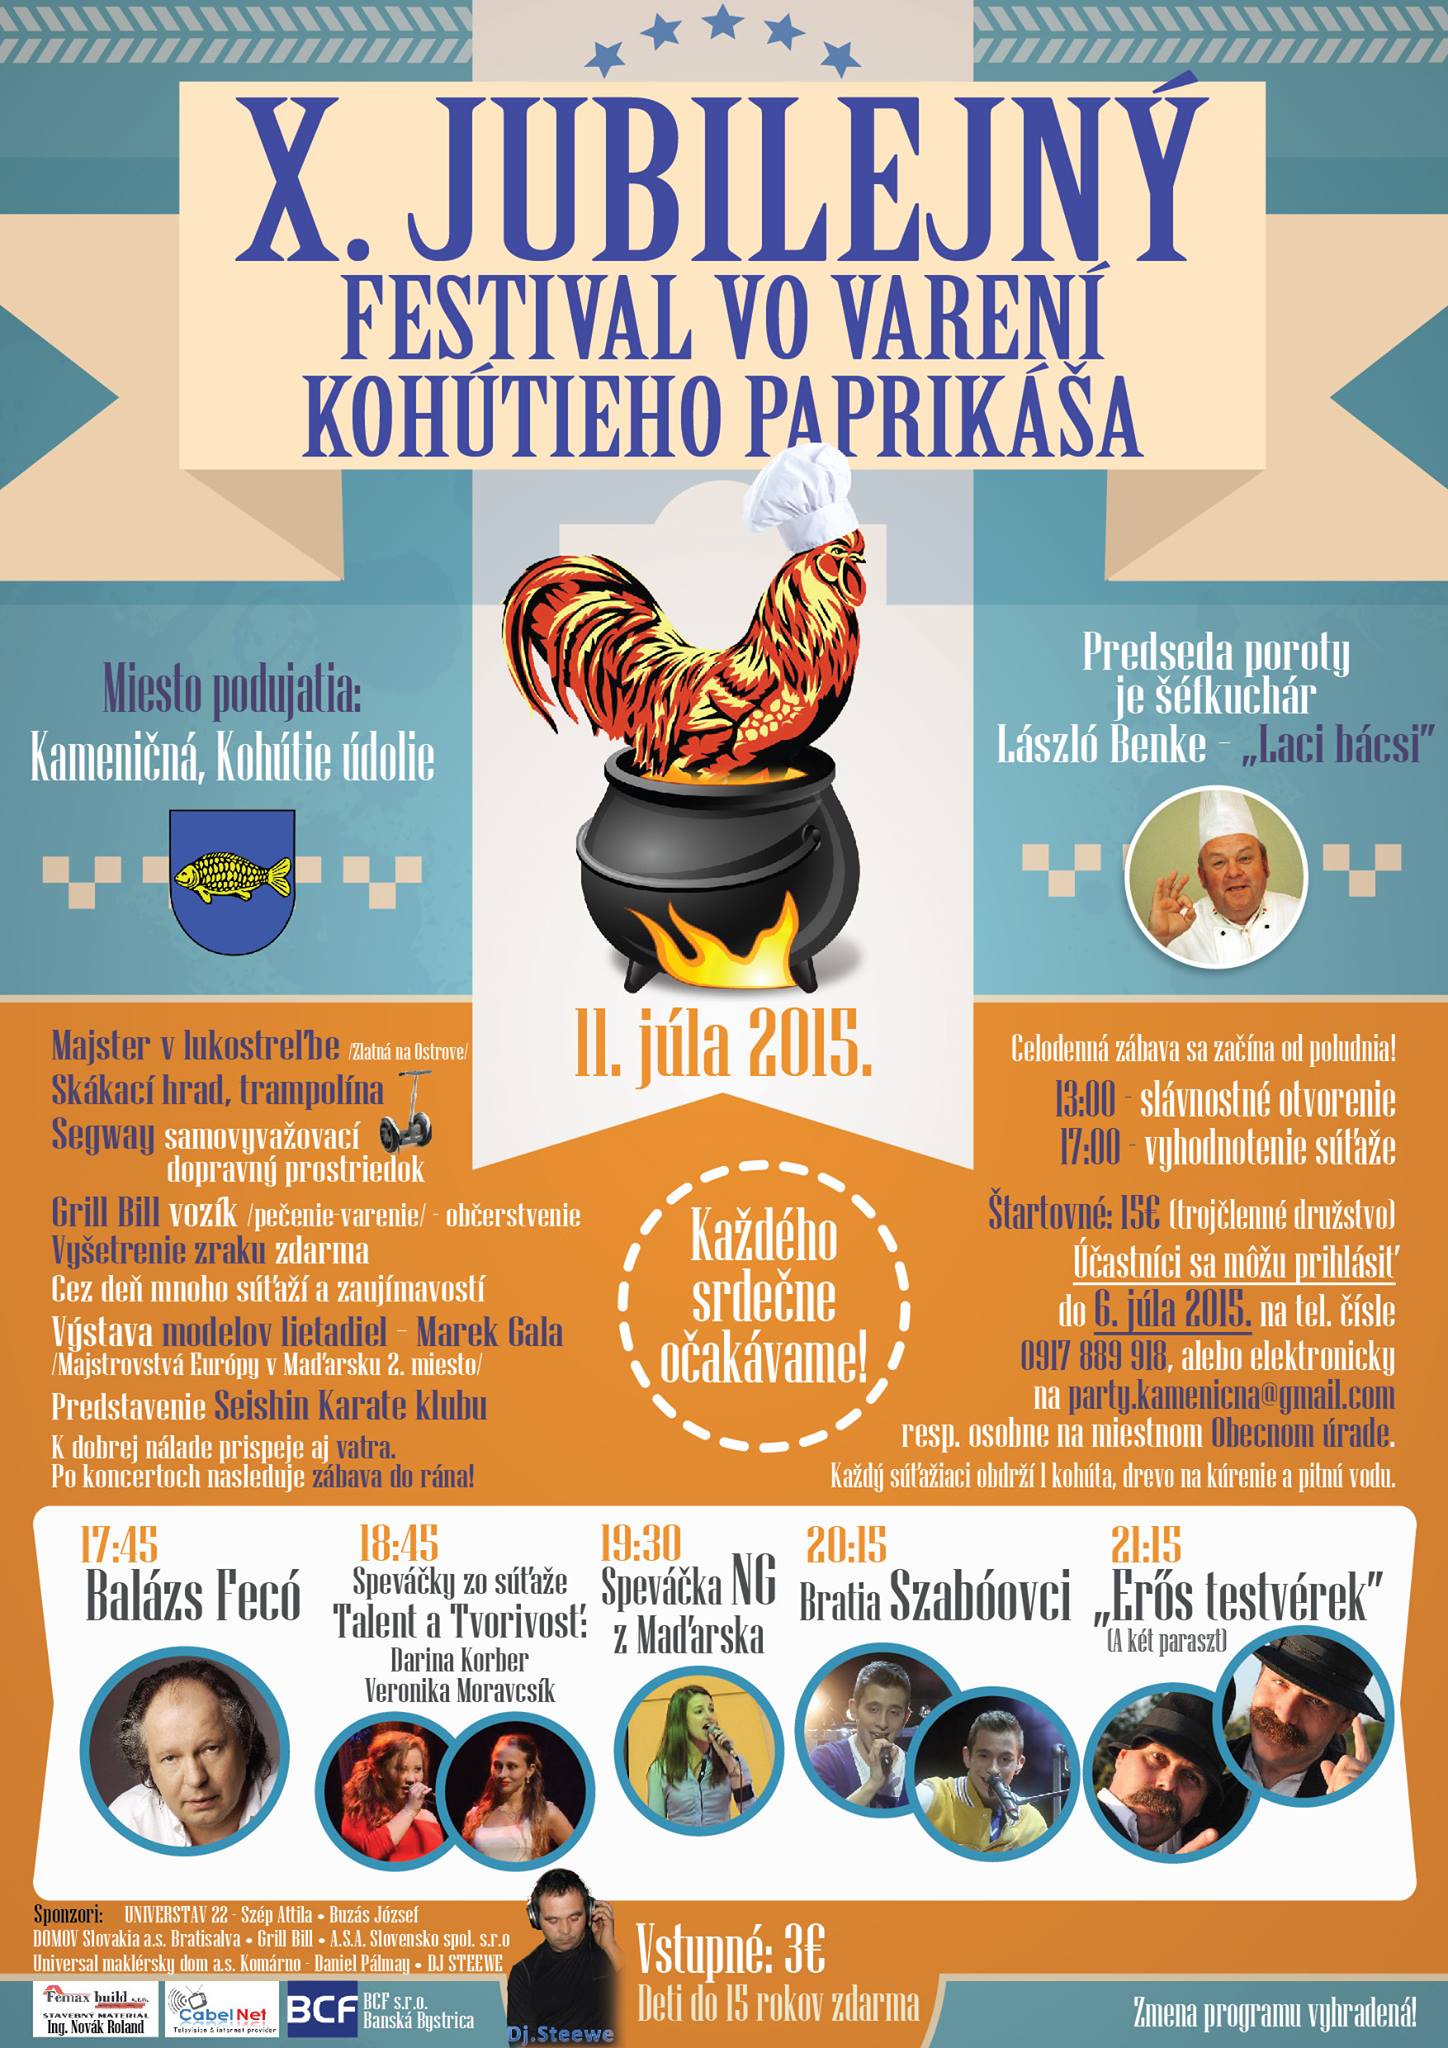 X.Festival vo varení kohútieho paprikáša - X.Kakasfőző Feszivál 2015